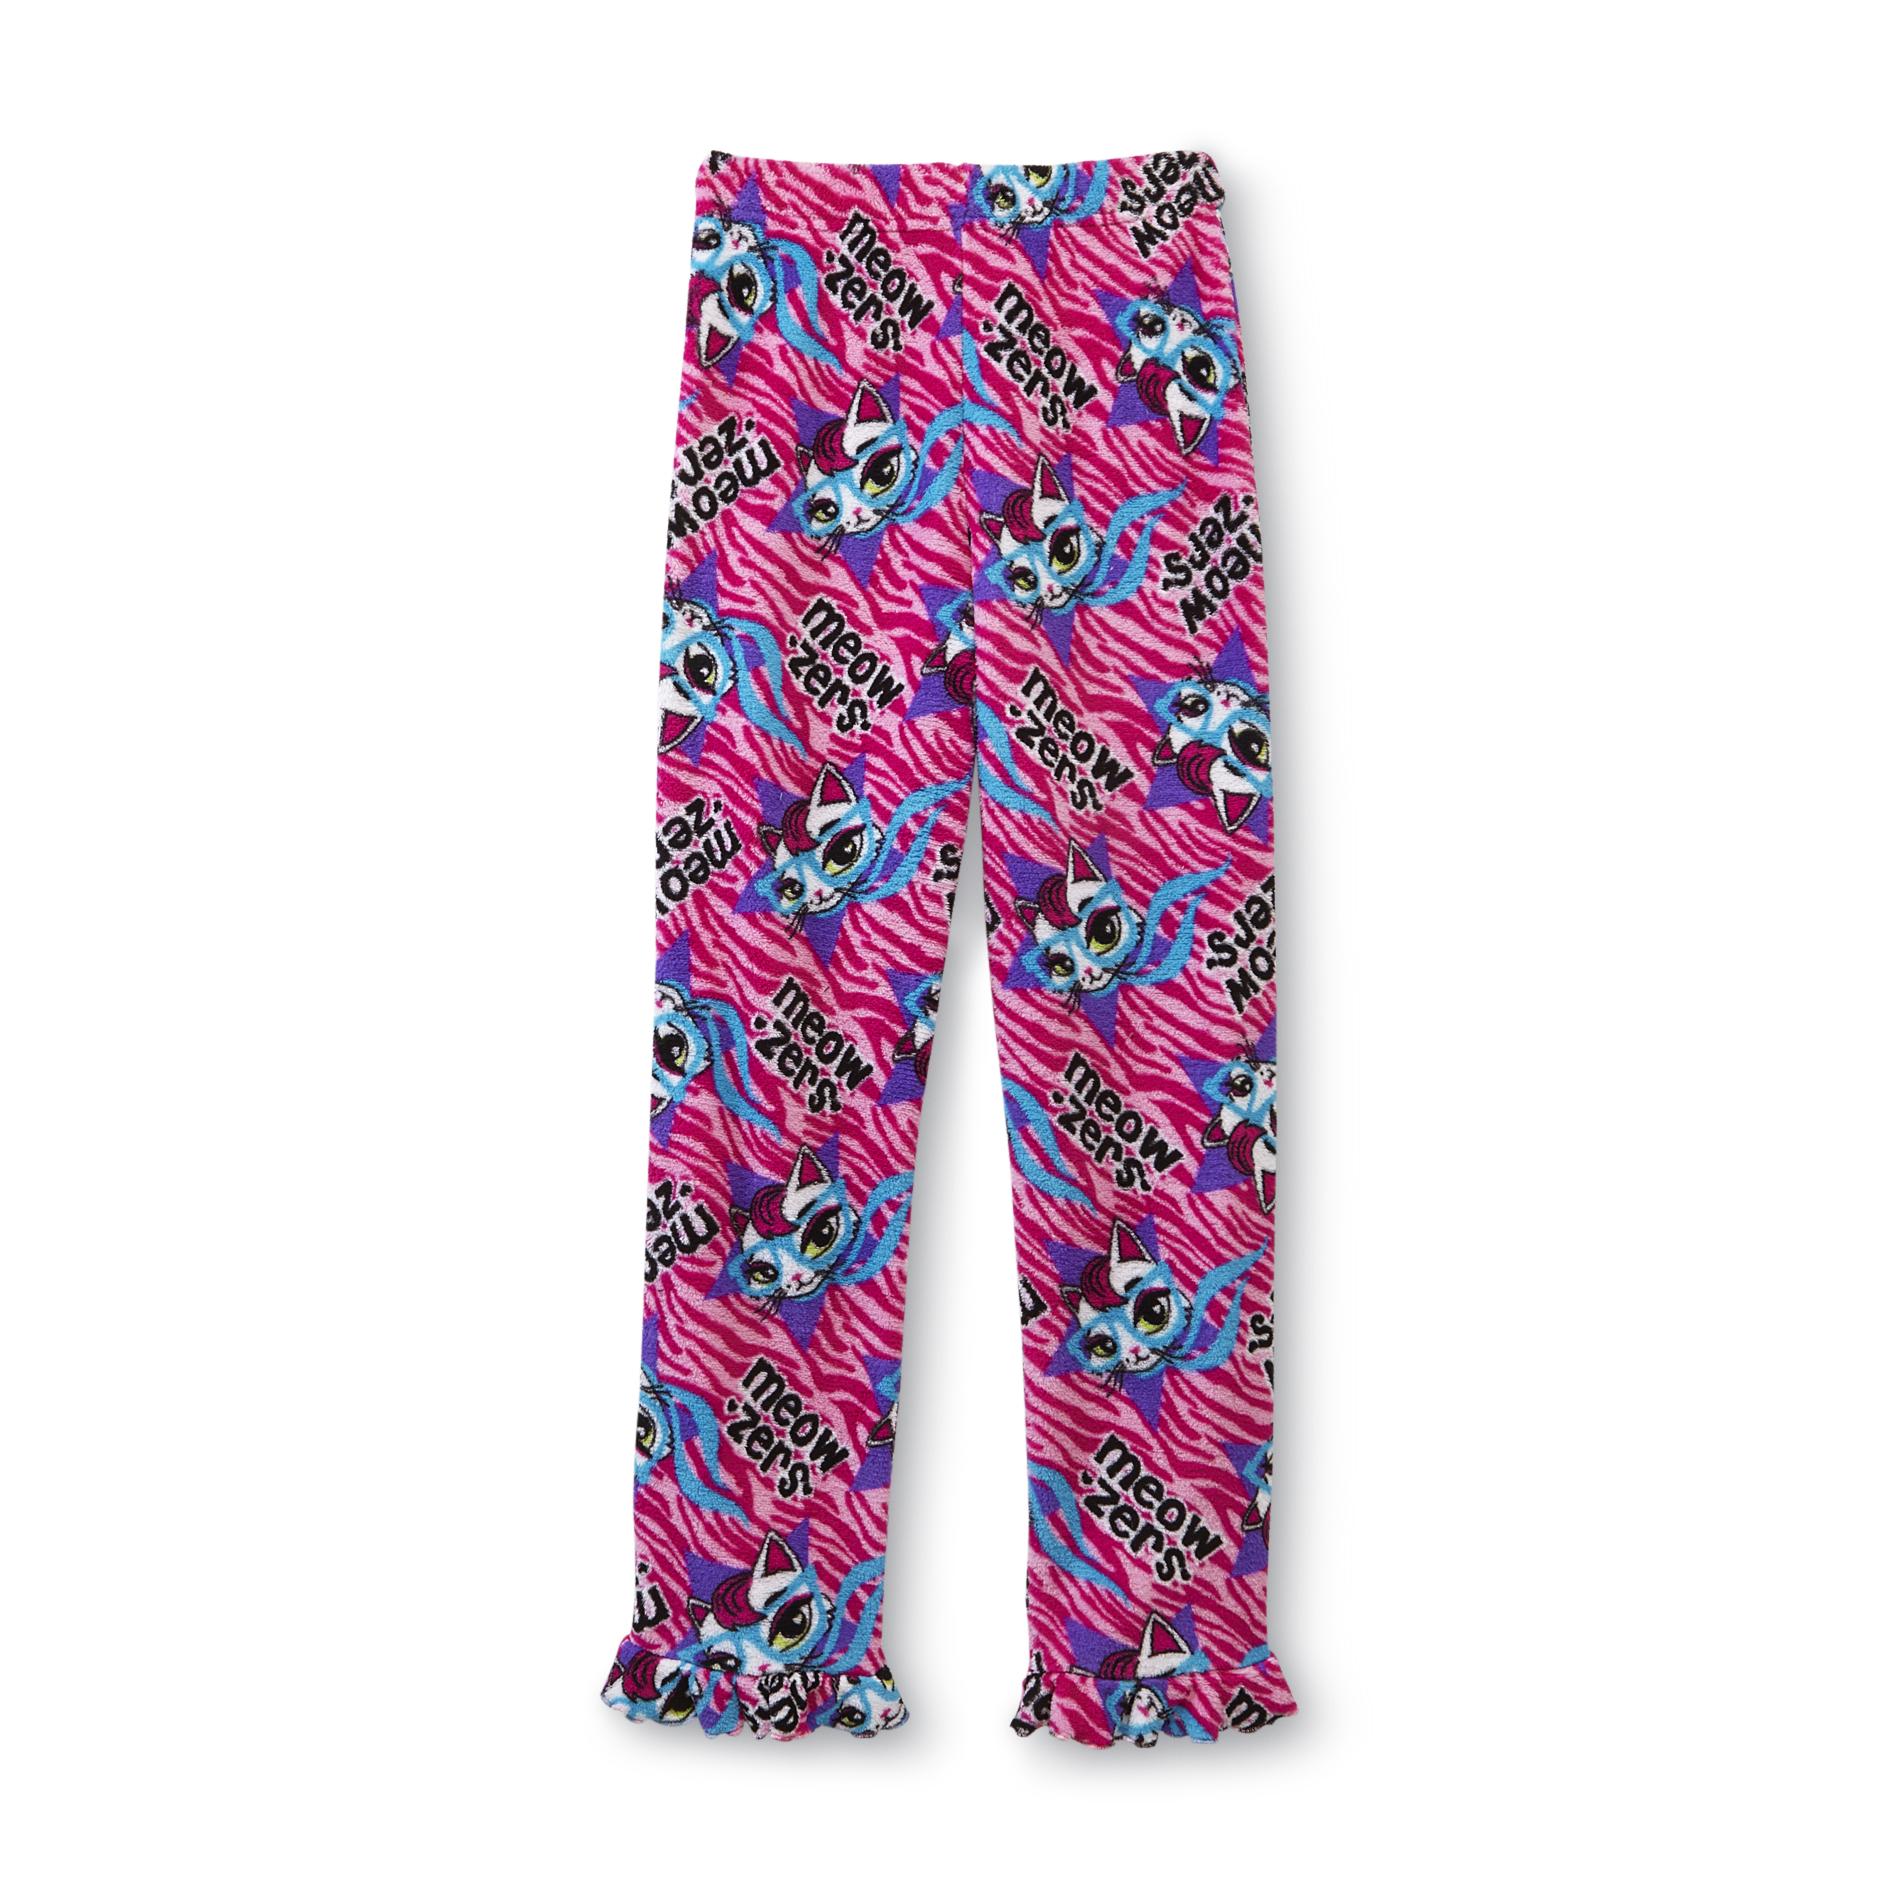 Joe Boxer Girl's Plush Pajama Pants - Zebra Print